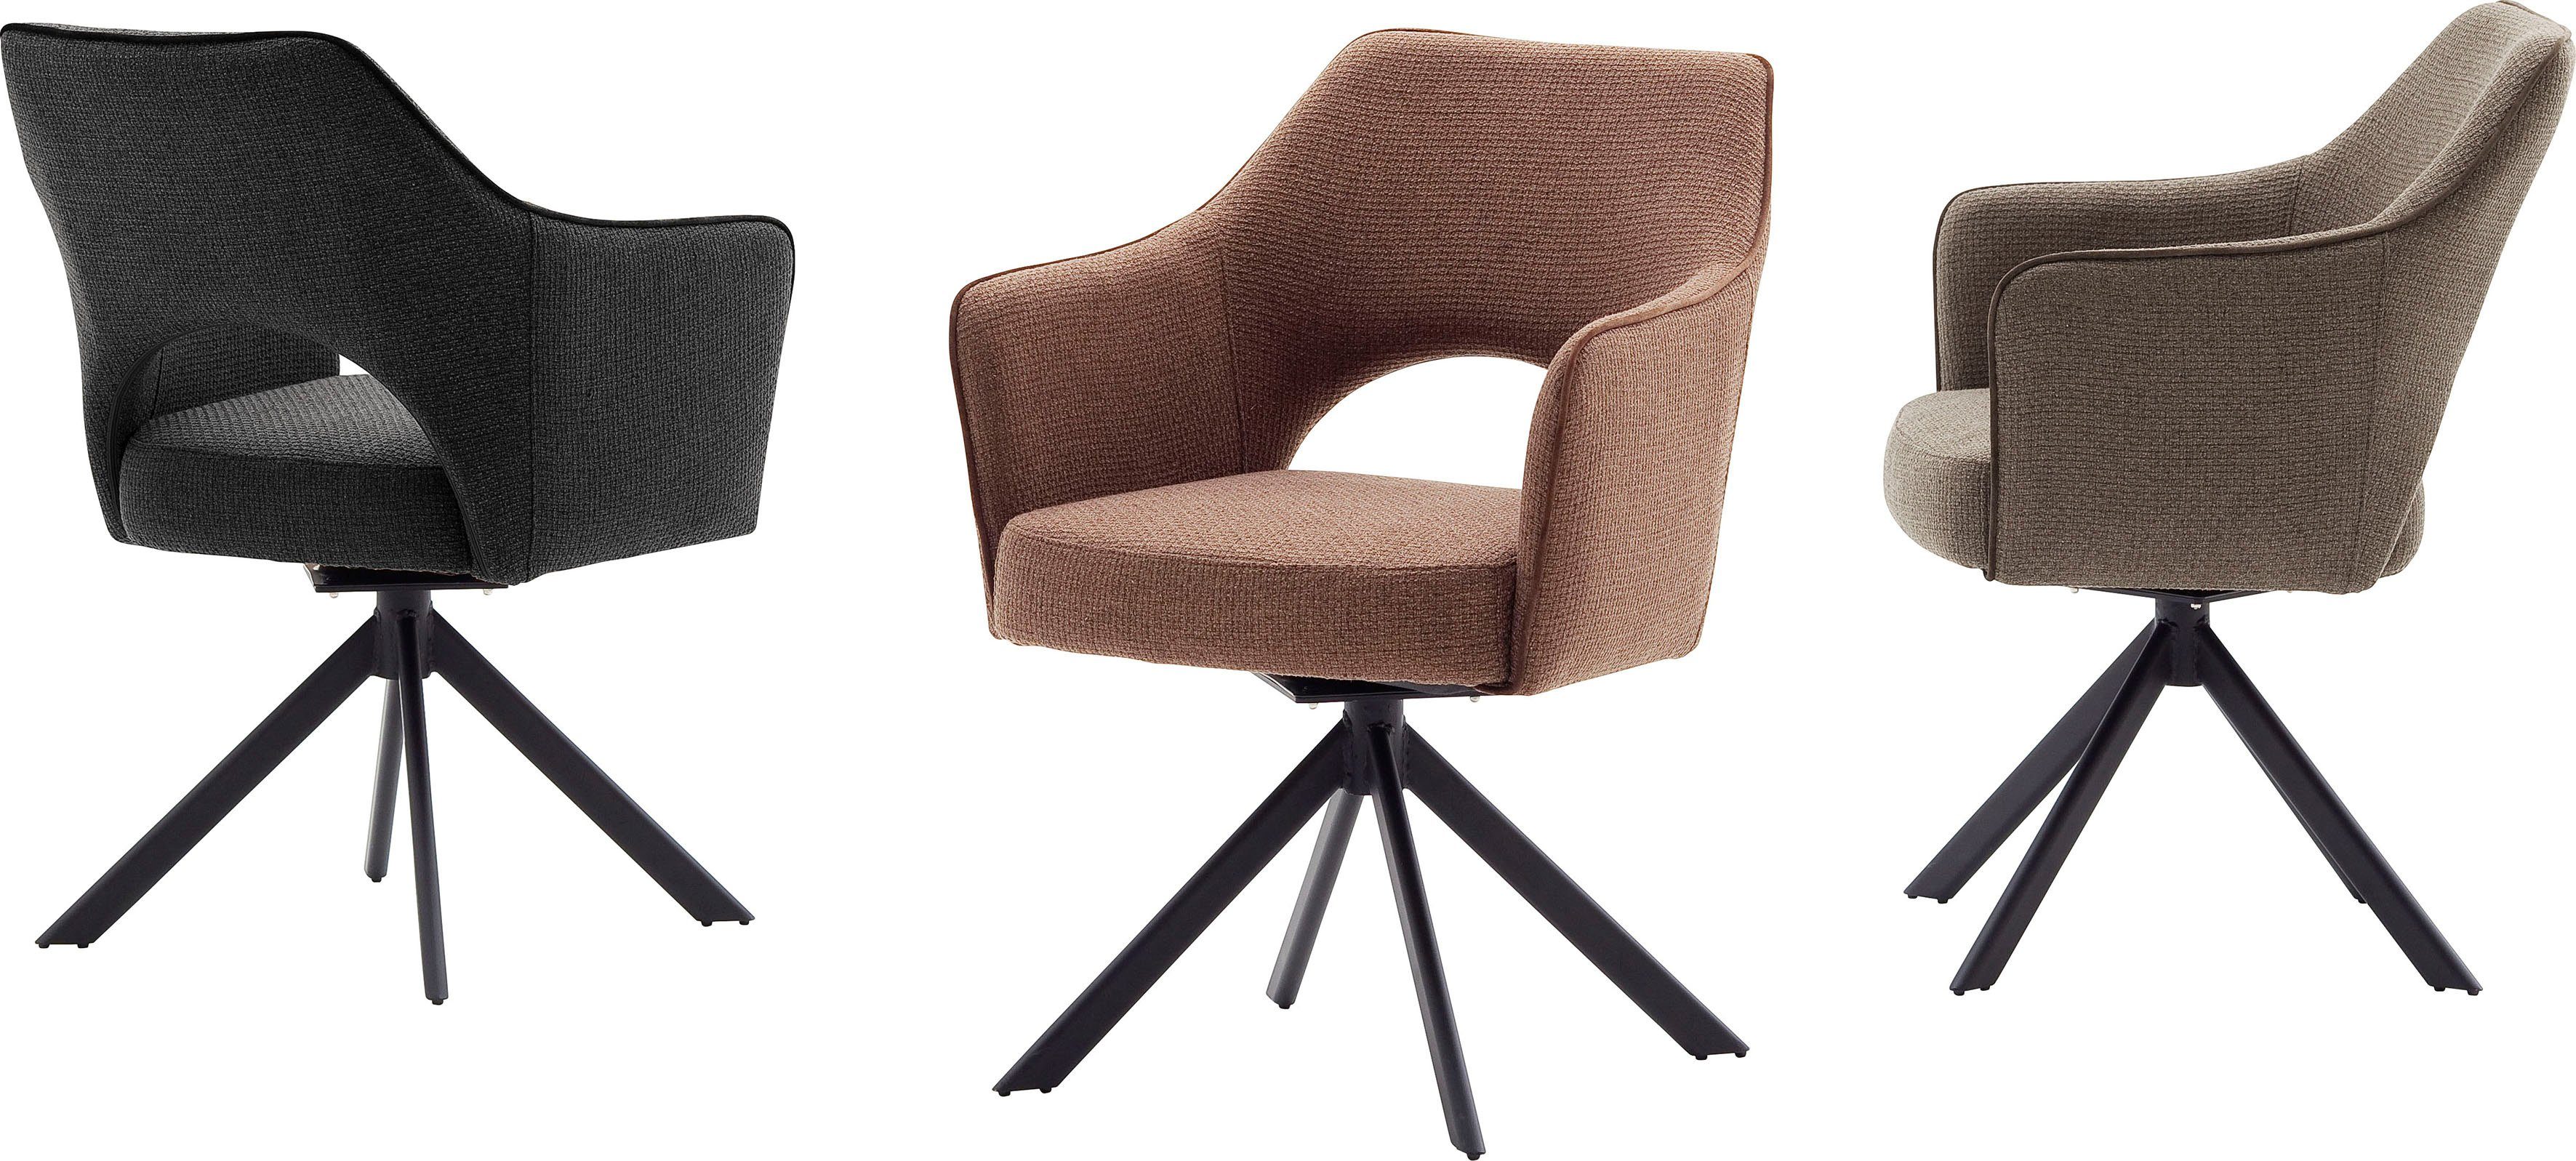 Rostbraun St), drehbar Metall furniture 180° mit | Tonala lackiert (Set, 2 4-Fußstuhl schwarz matt Nivellierung MCA